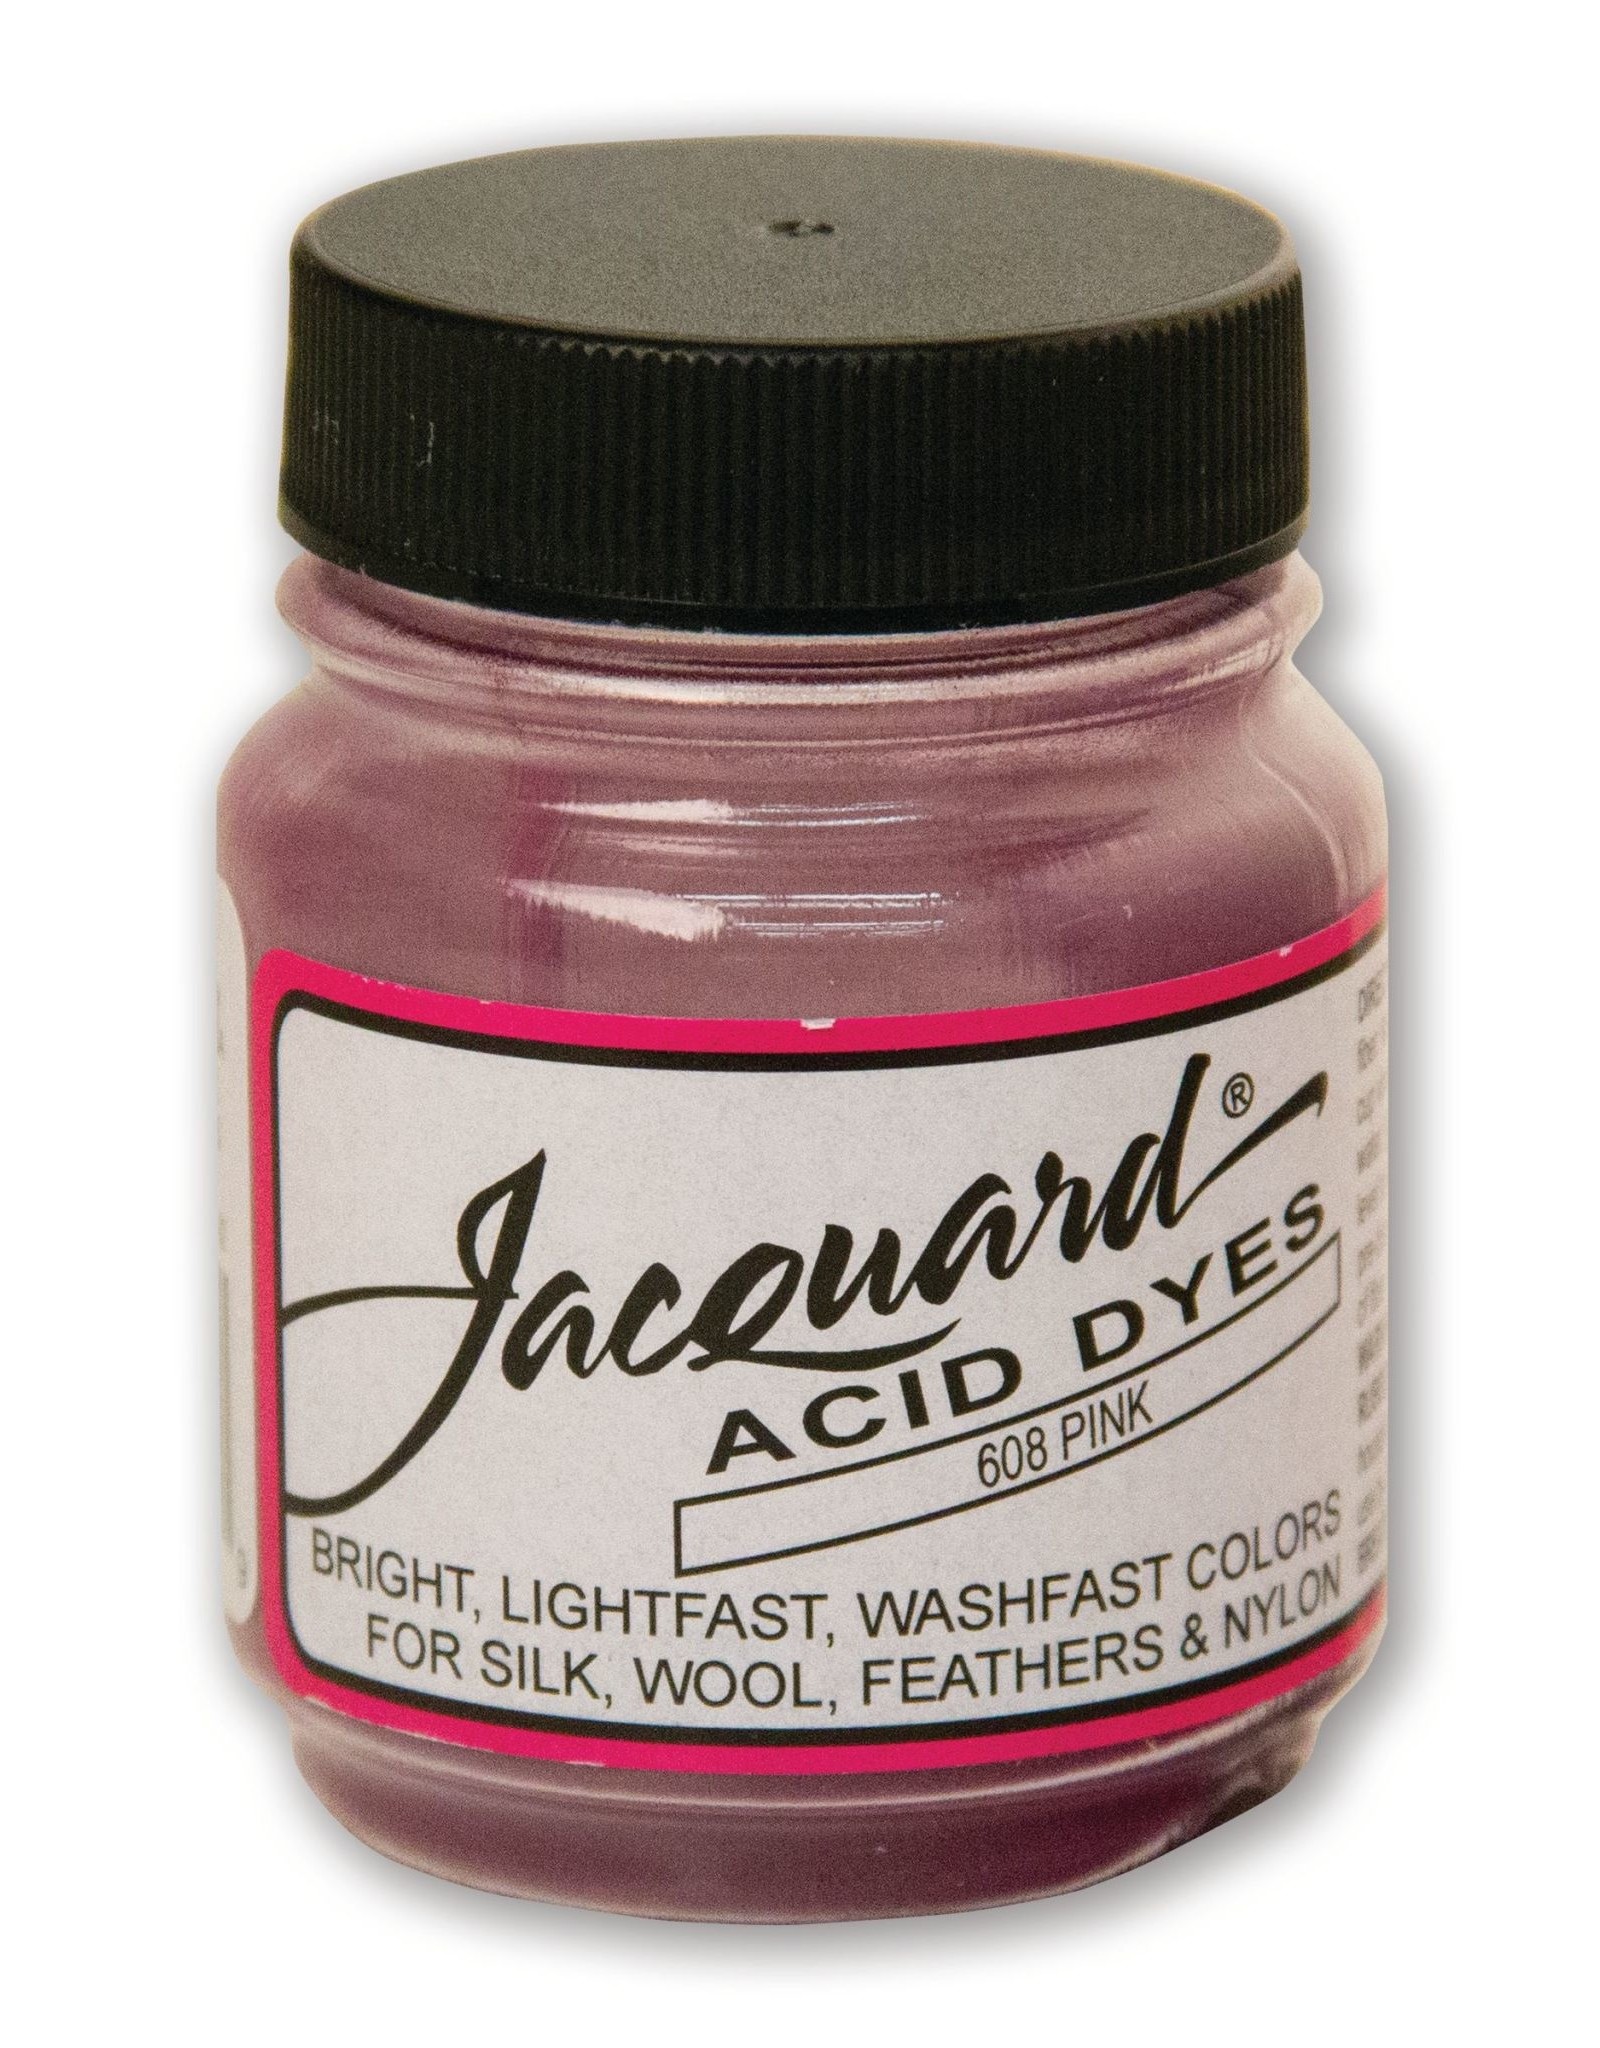 Jacquard Jacquard Acid Dye, #608 Pink ½oz